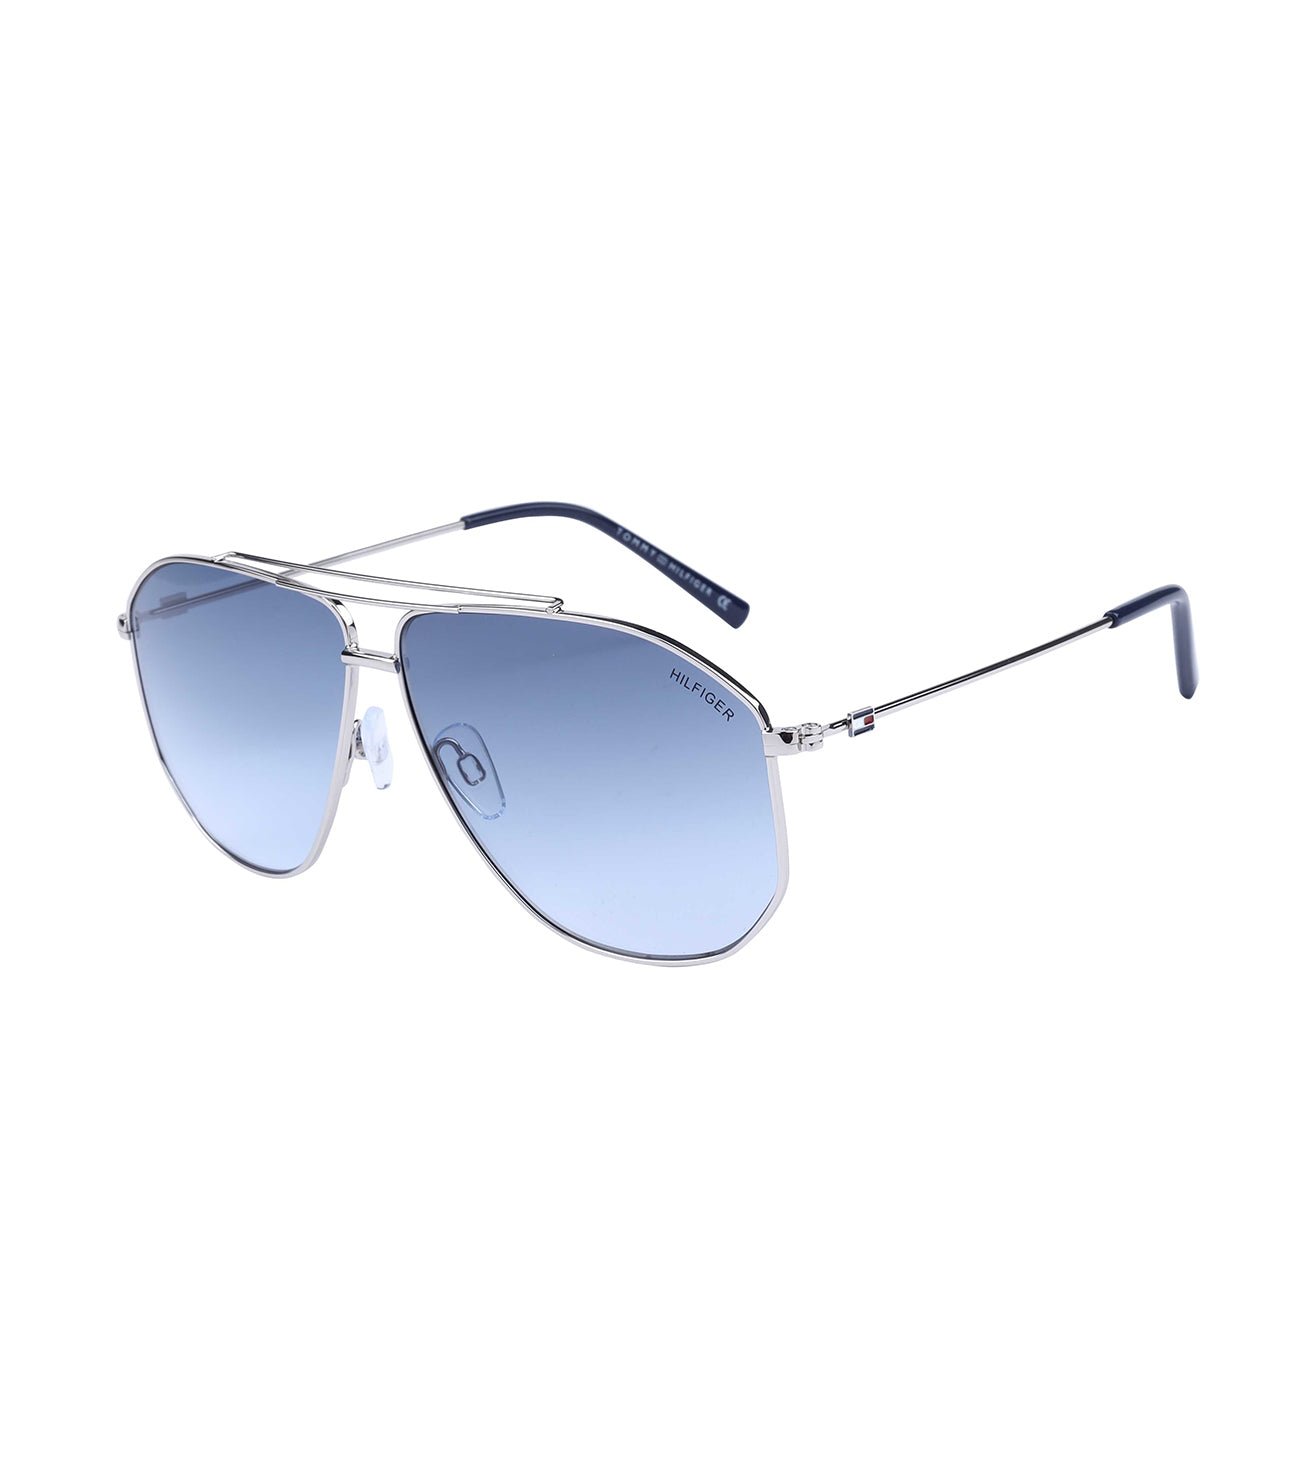 Tommy Hilfiger Men's Blue Aviator Sunglasses